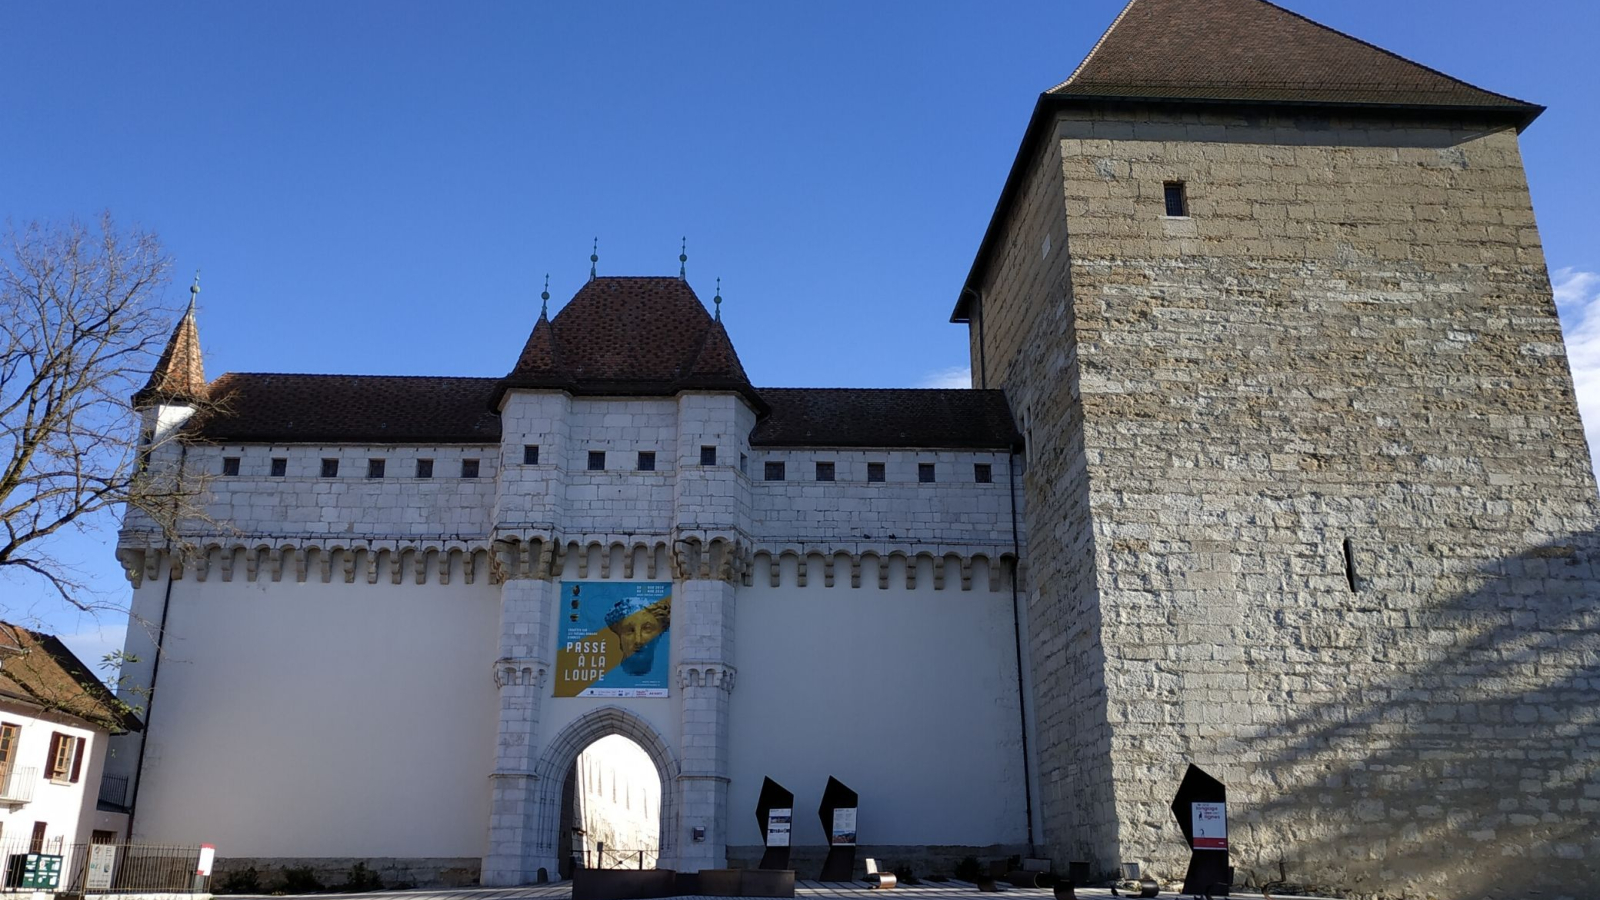 Annecy castle / museum